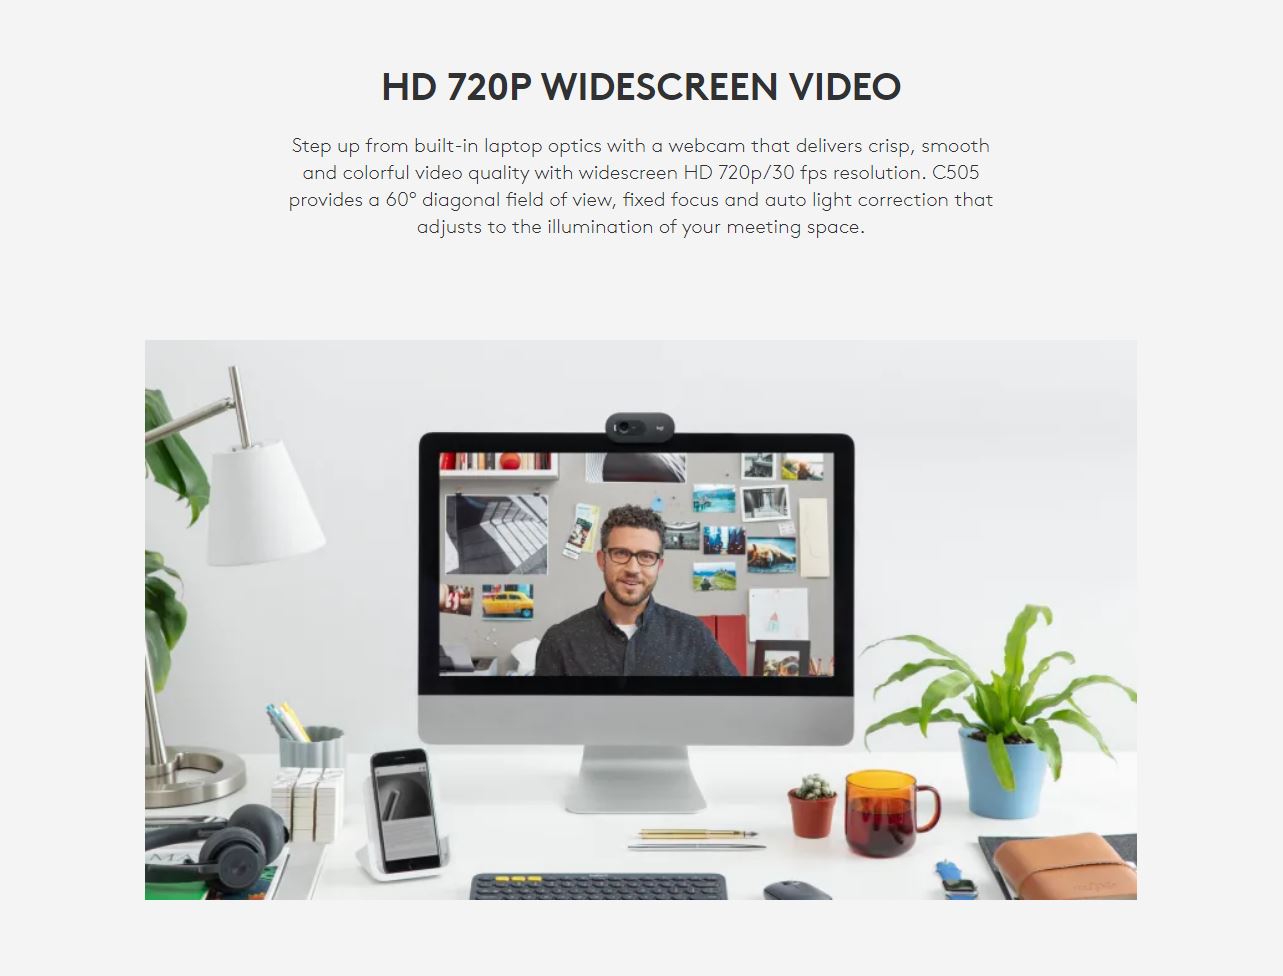 Camara Web Hd Logitech C505 Webcam 720p Videollamada Stream, Playfactory